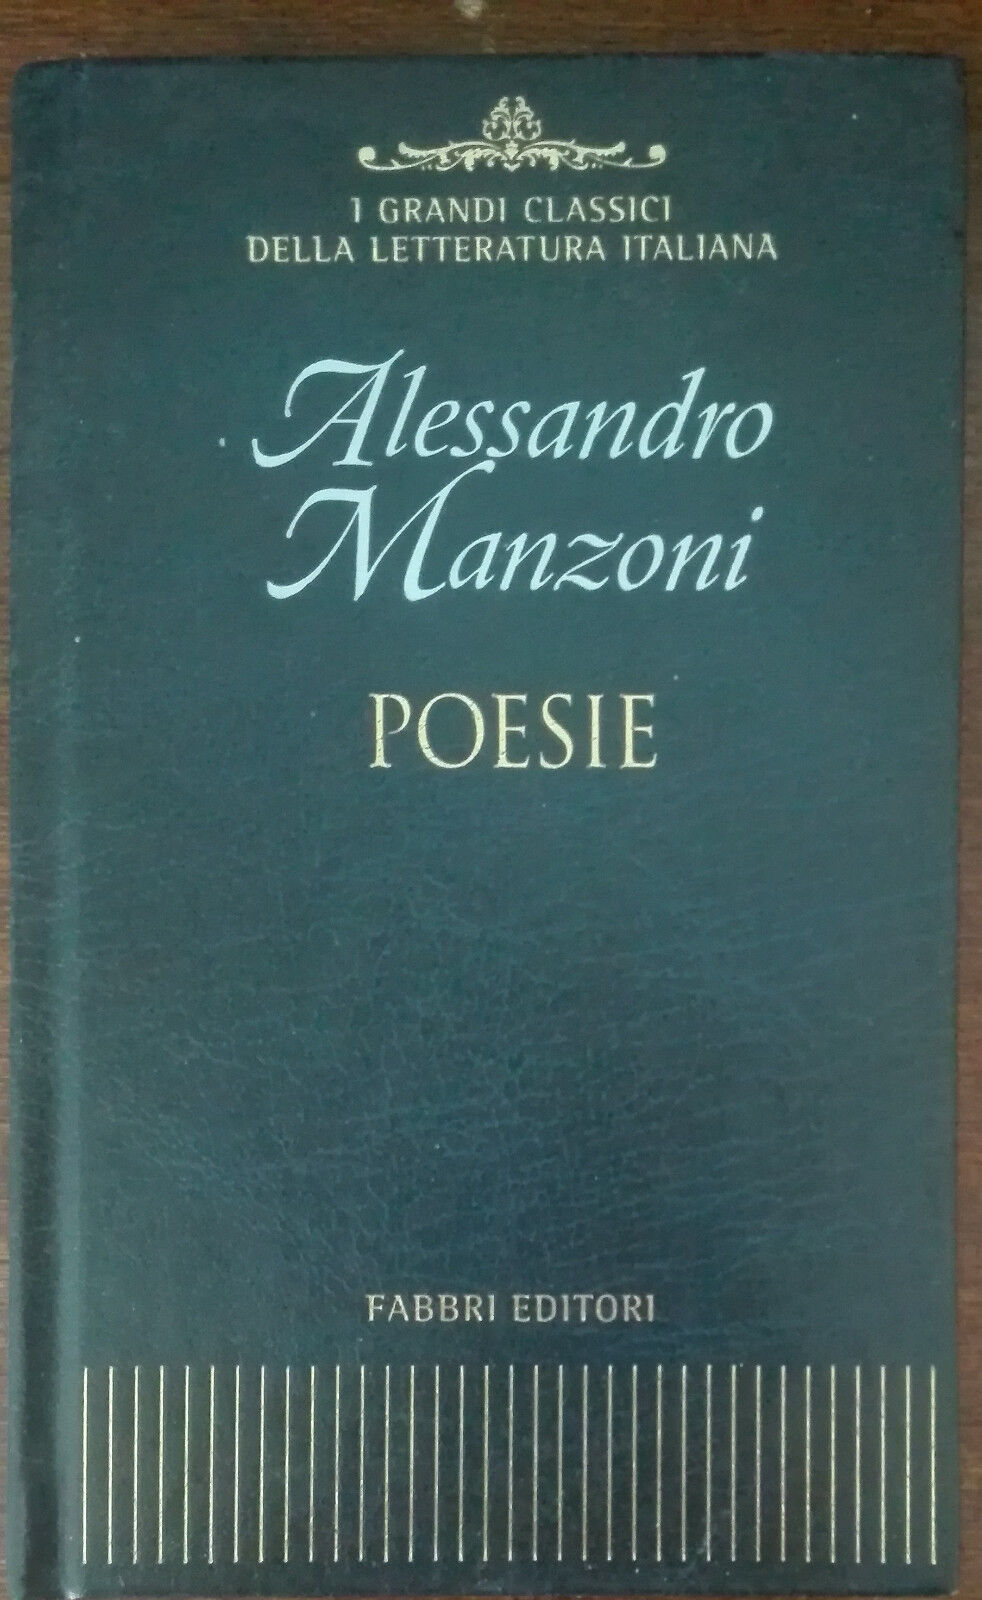 Poesie - Alessandro Manzoni - Fabbri, 2003 - A